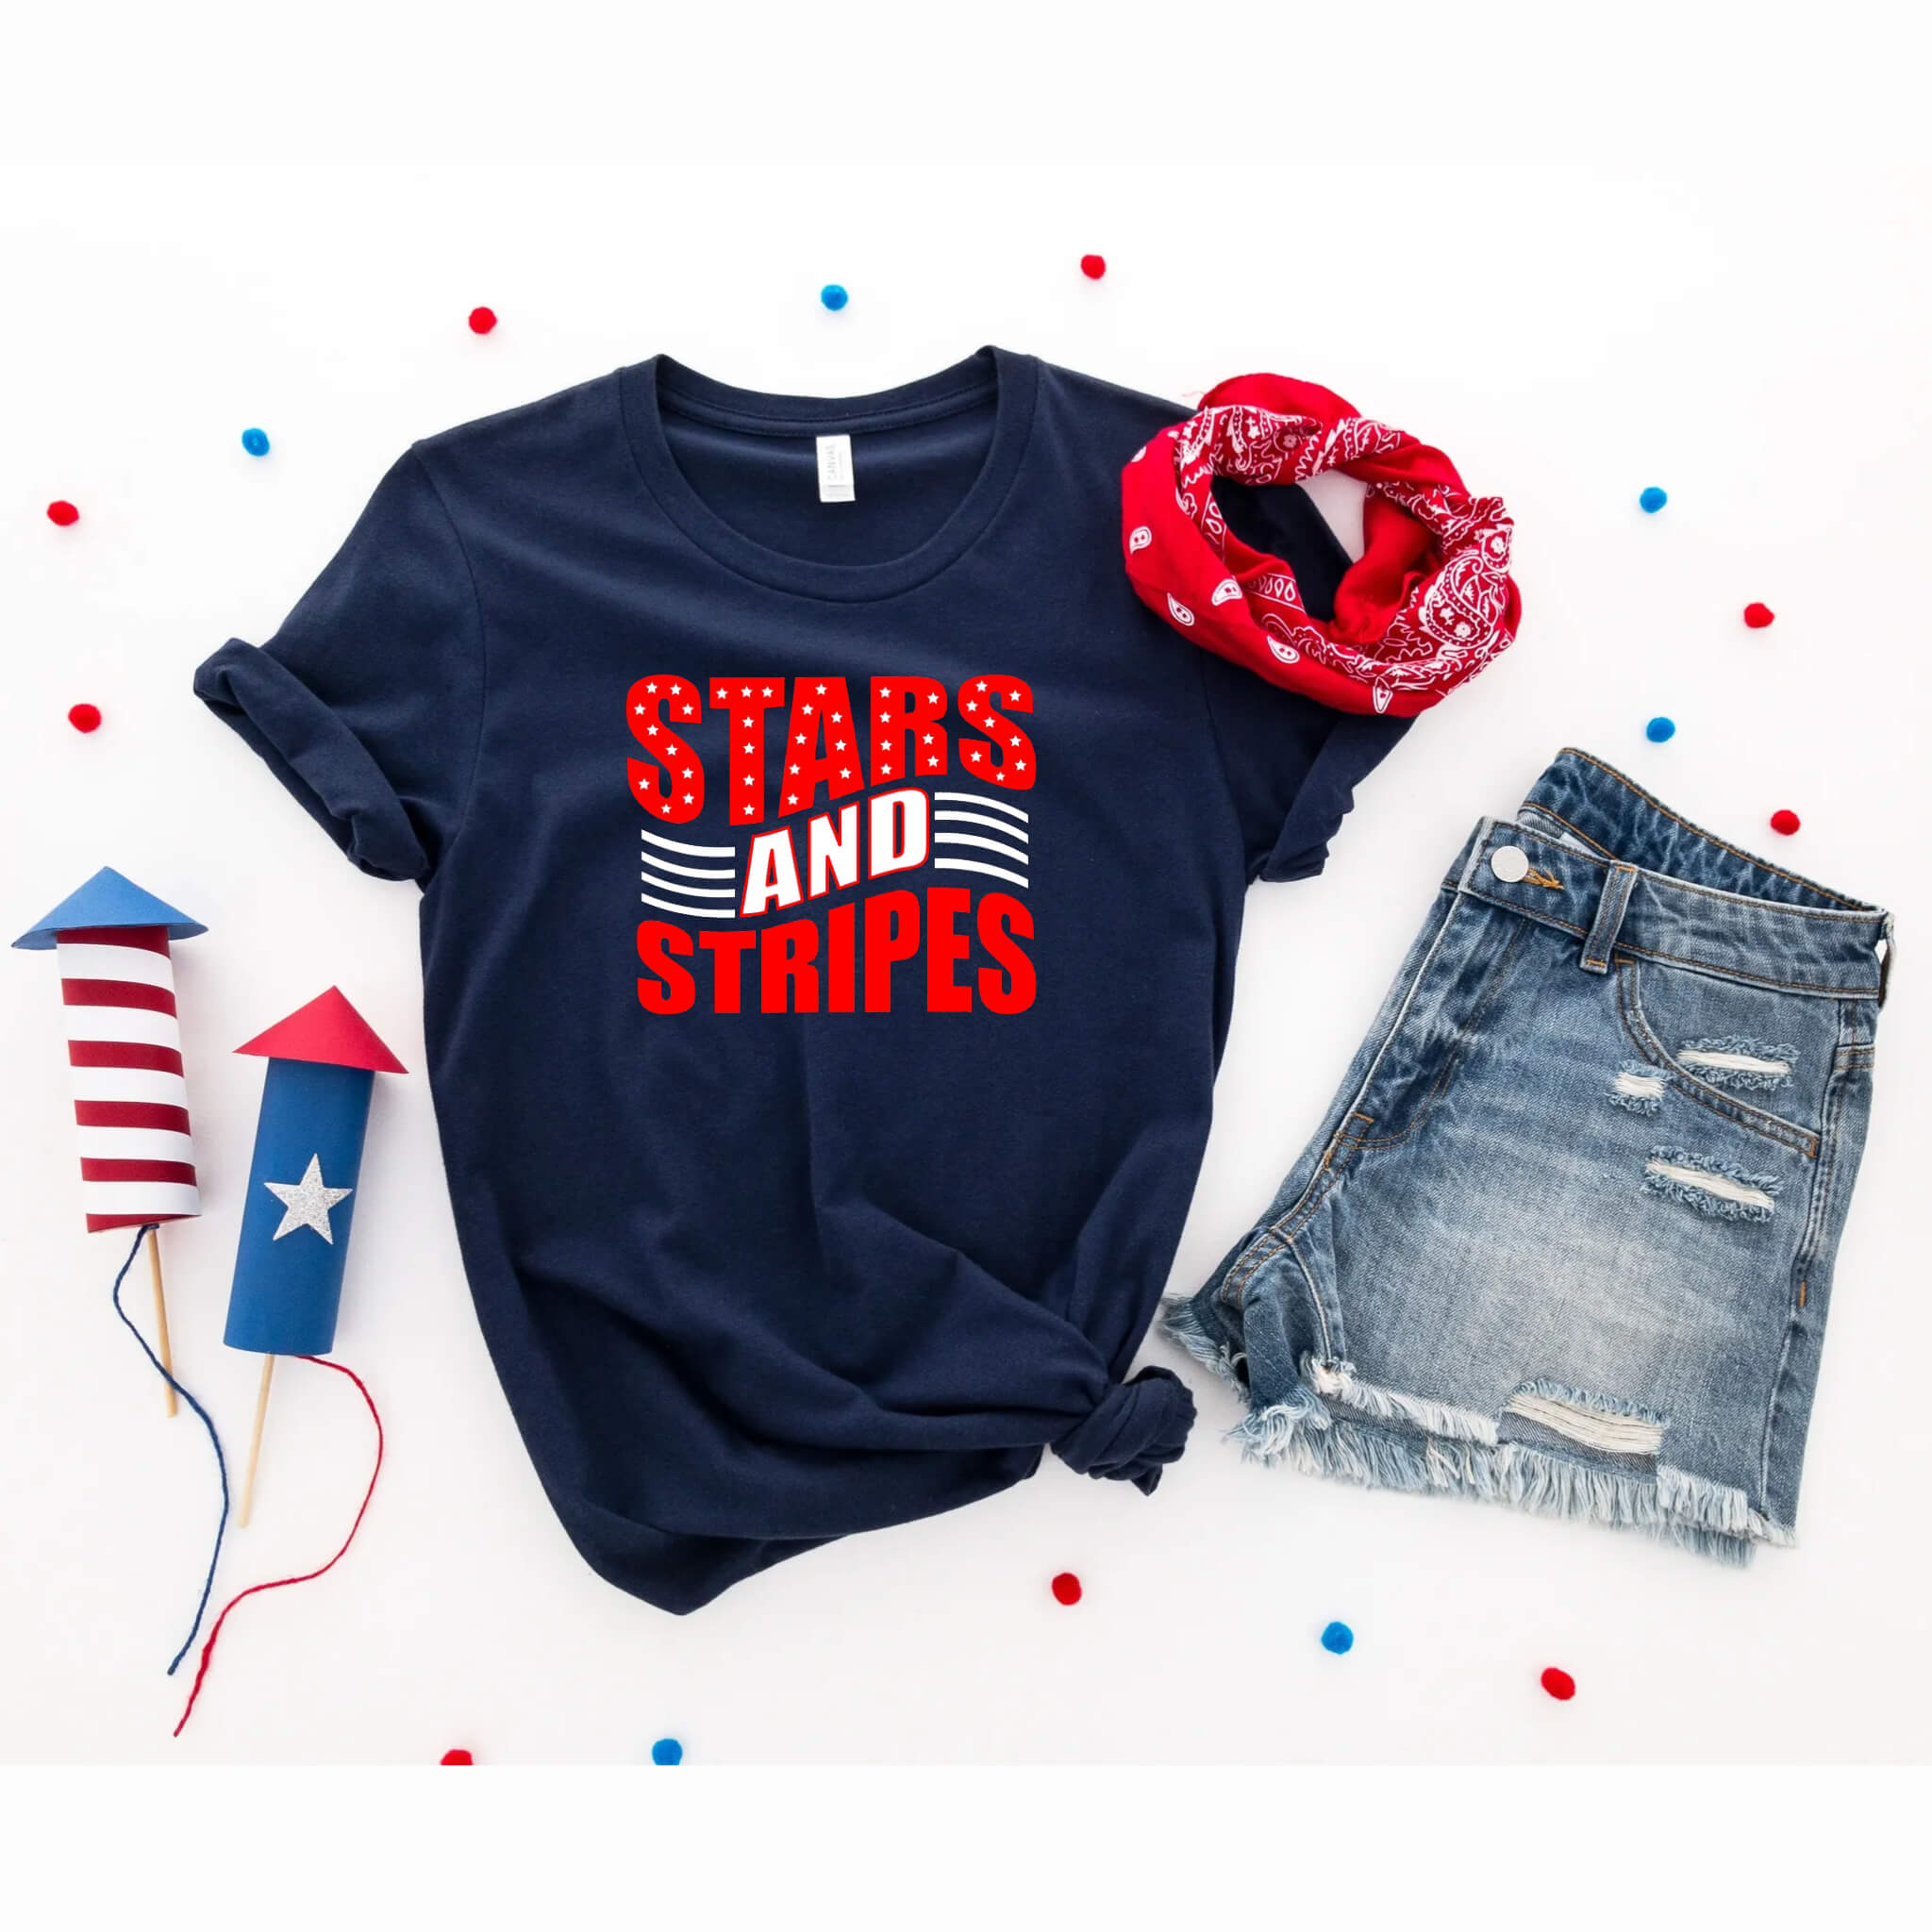 4th of July - Stars & Stripes Patriotic Graphic Print Women's Tank Top / T-Shirt